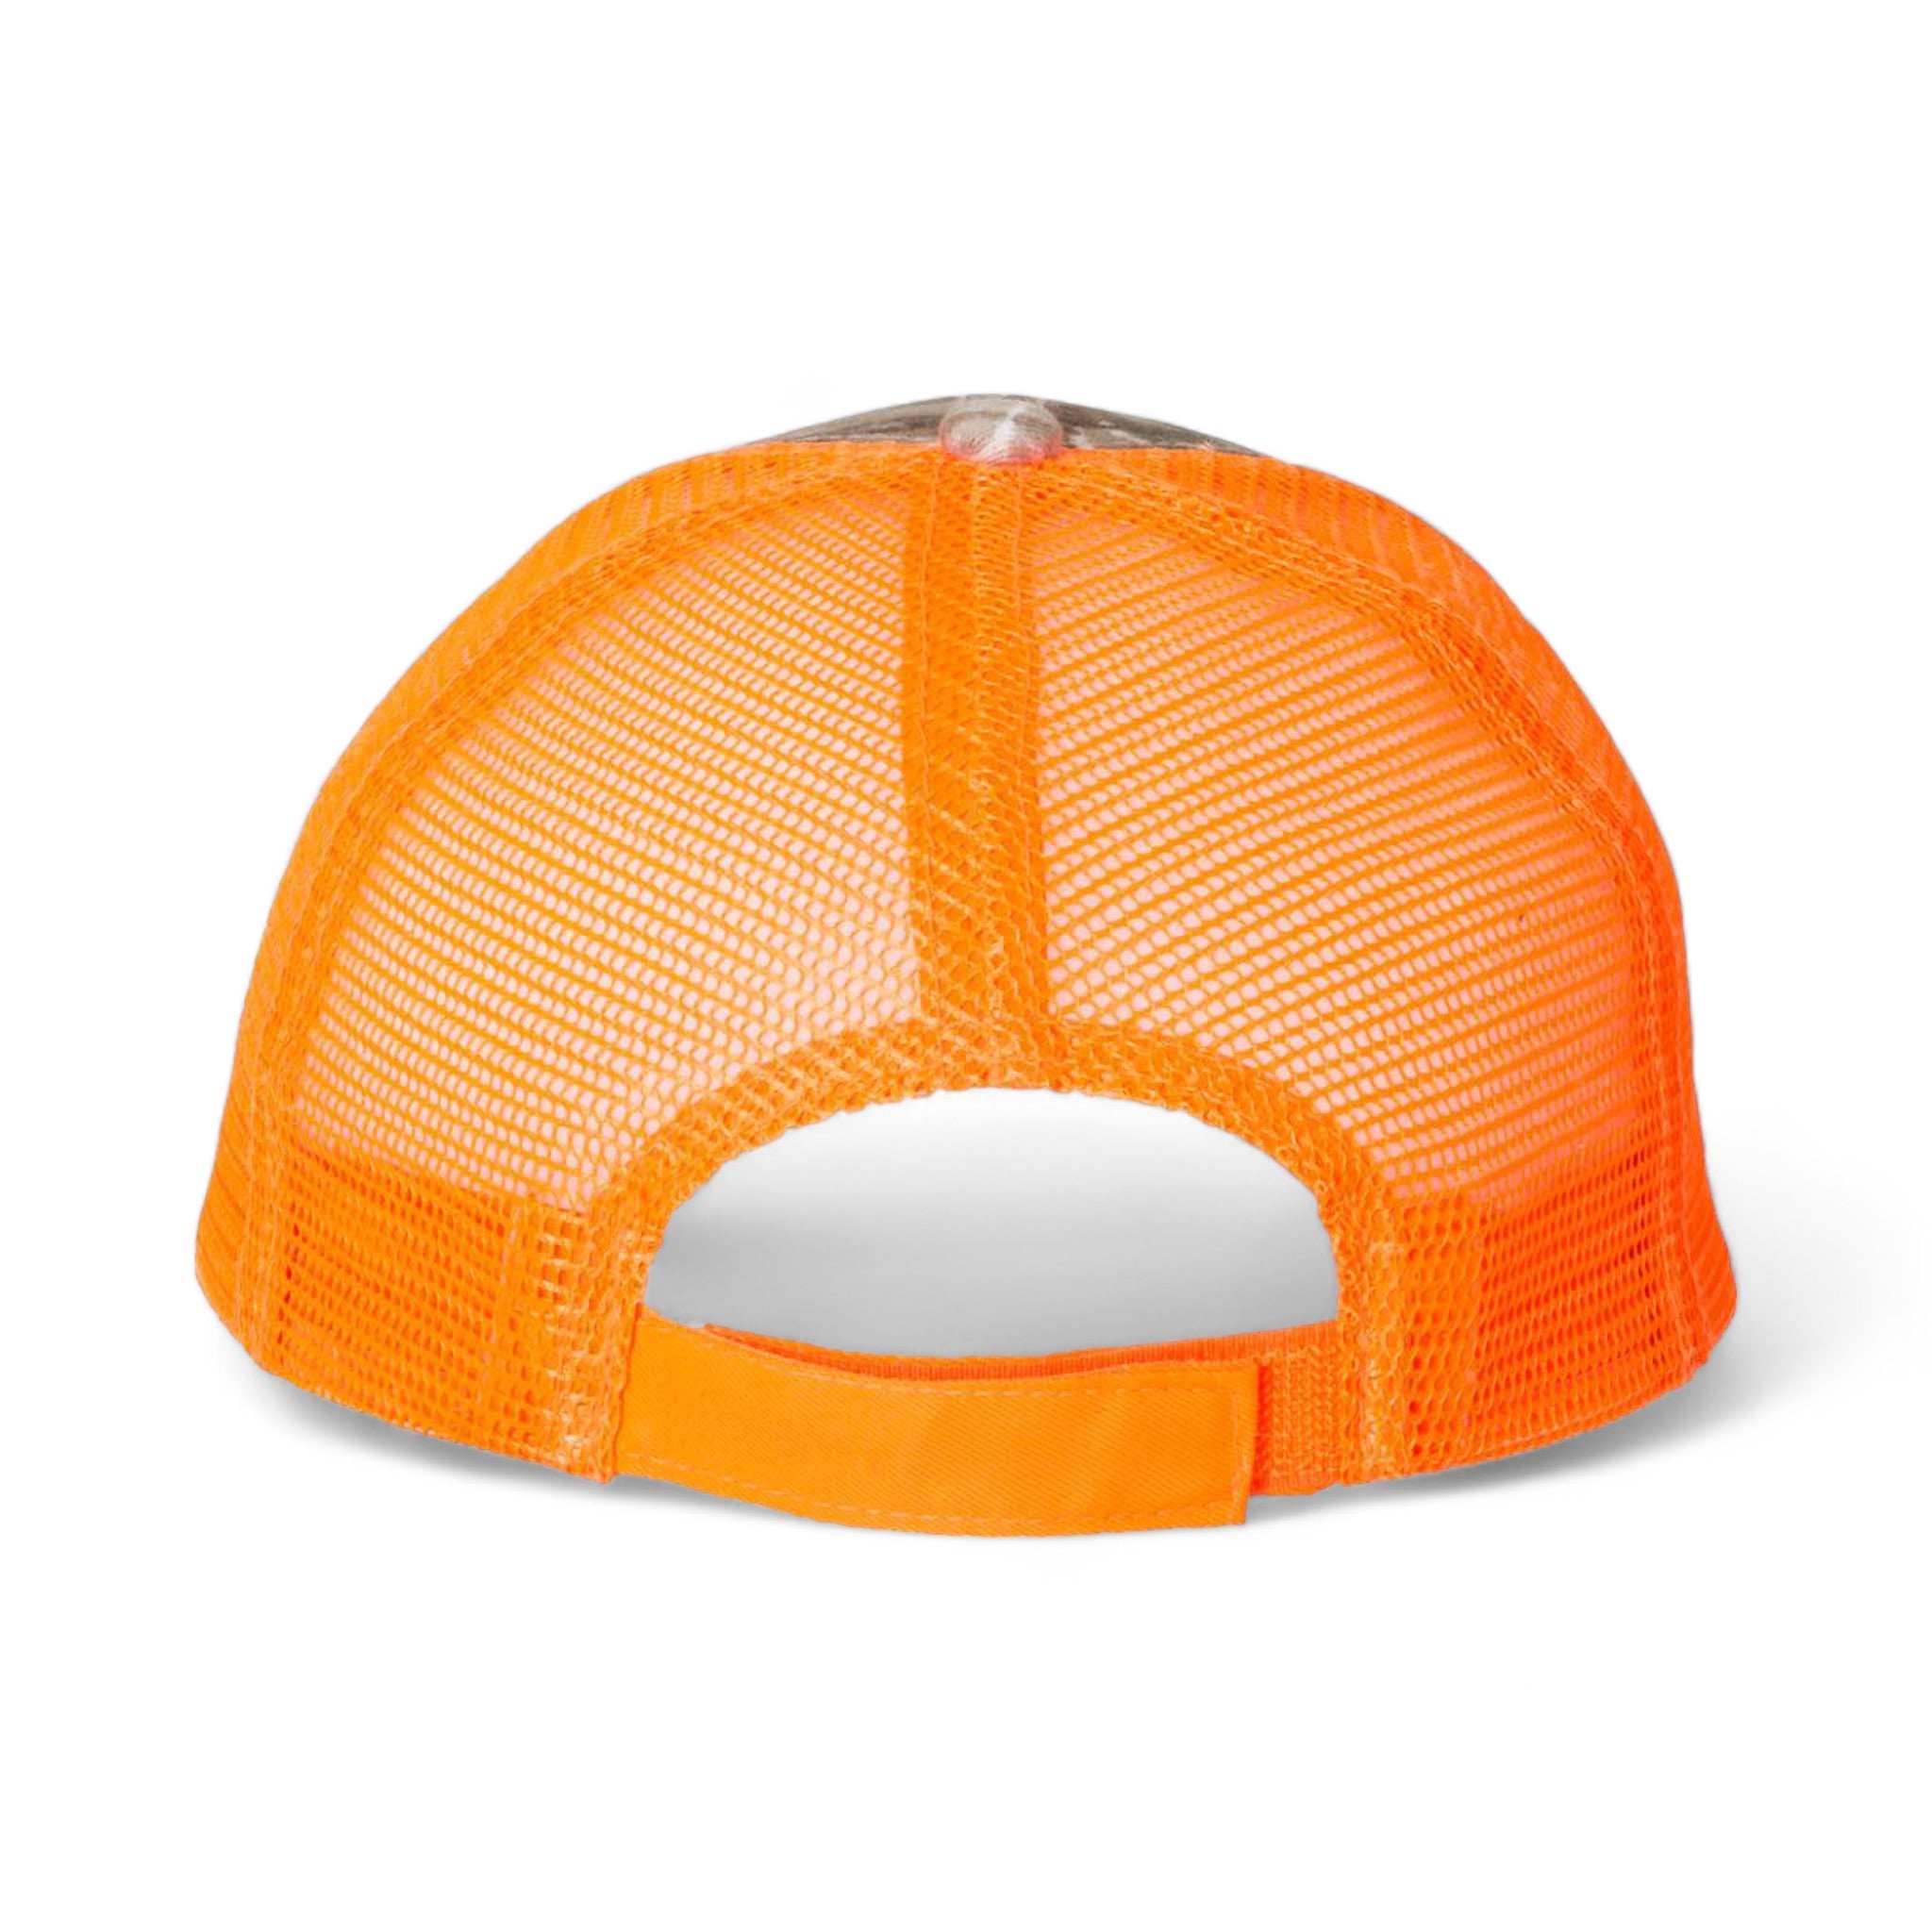 Back view of Kati LC5M custom hat in realtree ap and neon orange